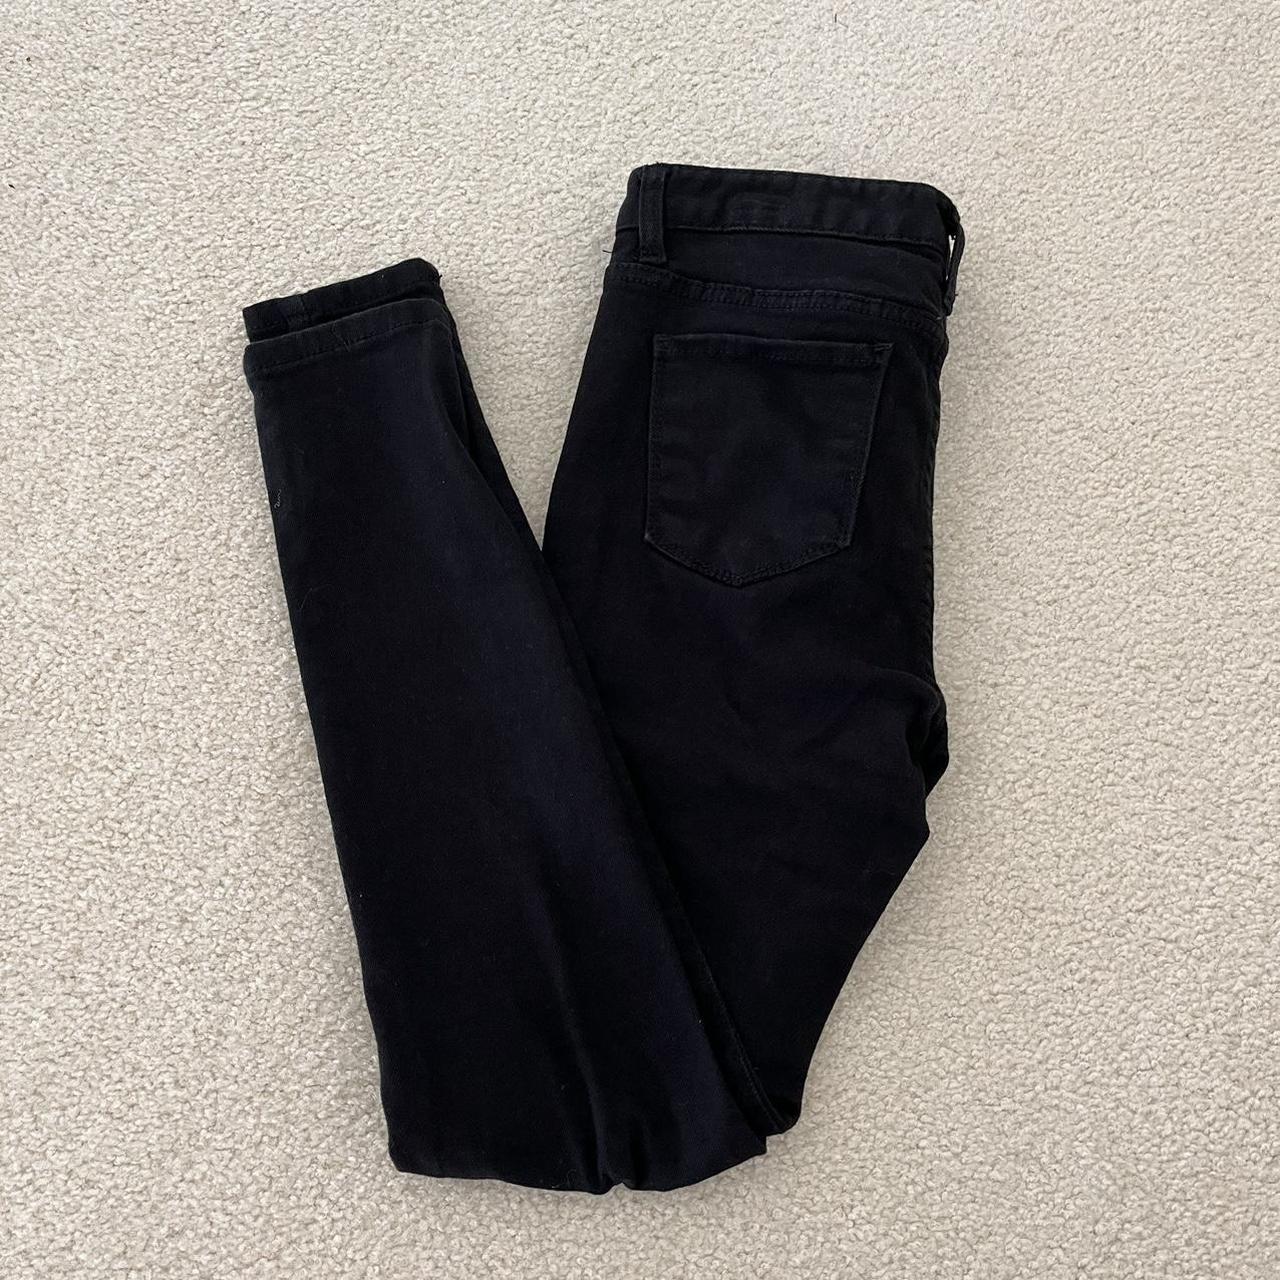 CHUU -5kg black skinny jeans -worn only few... - Depop